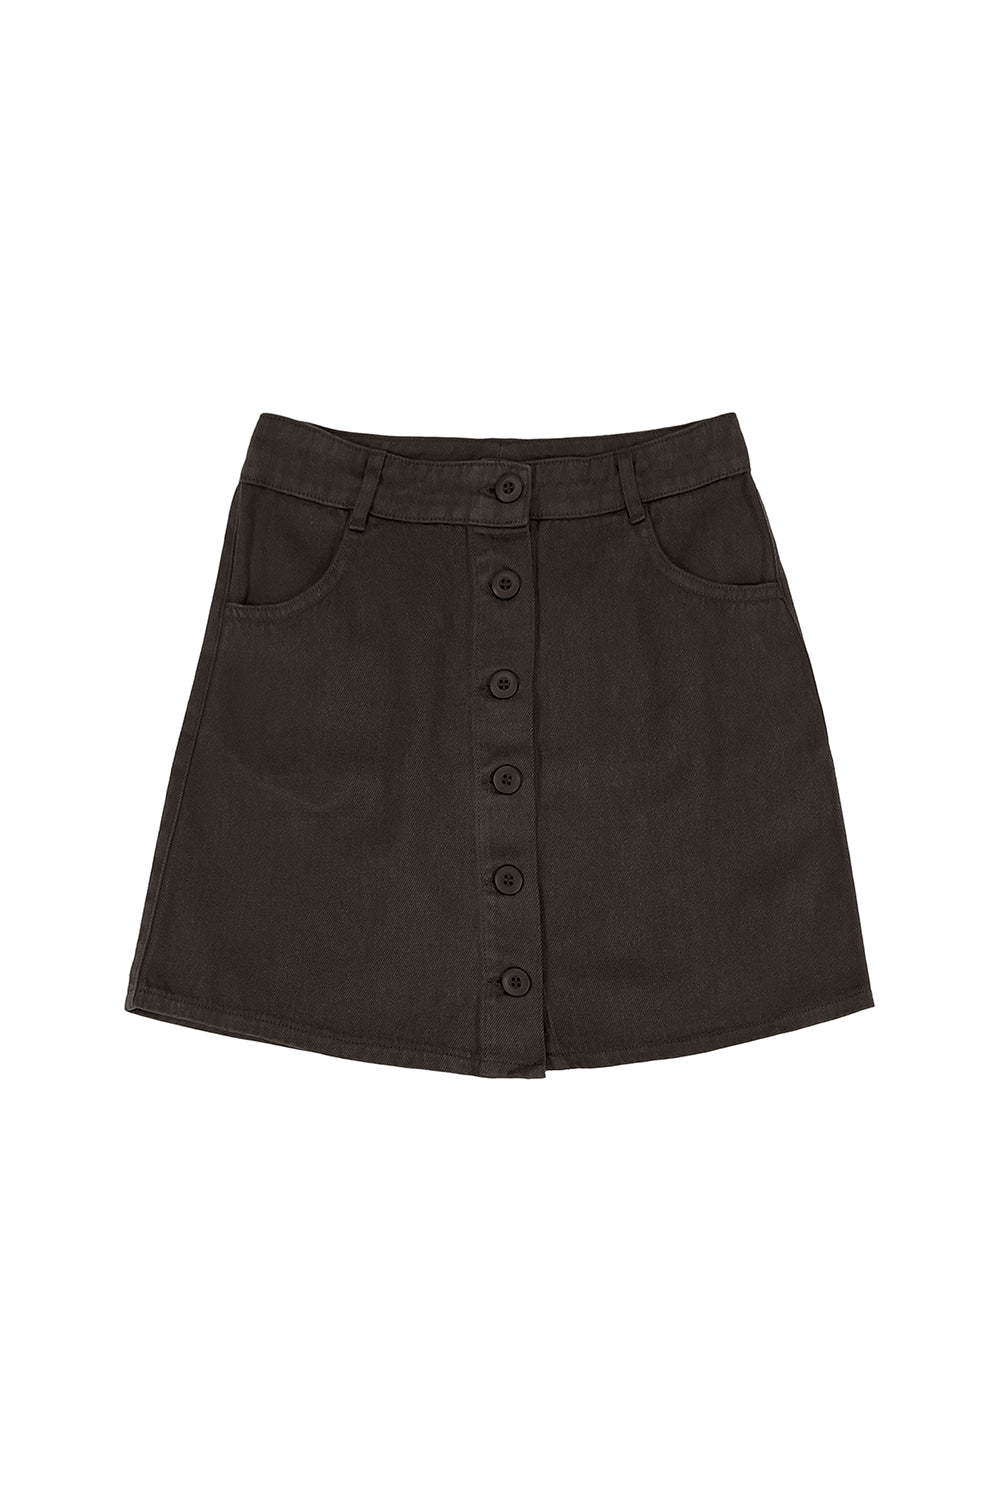 Vassar Skirt | Jungmaven Hemp Clothing & Accessories / Color: Coffee Bean